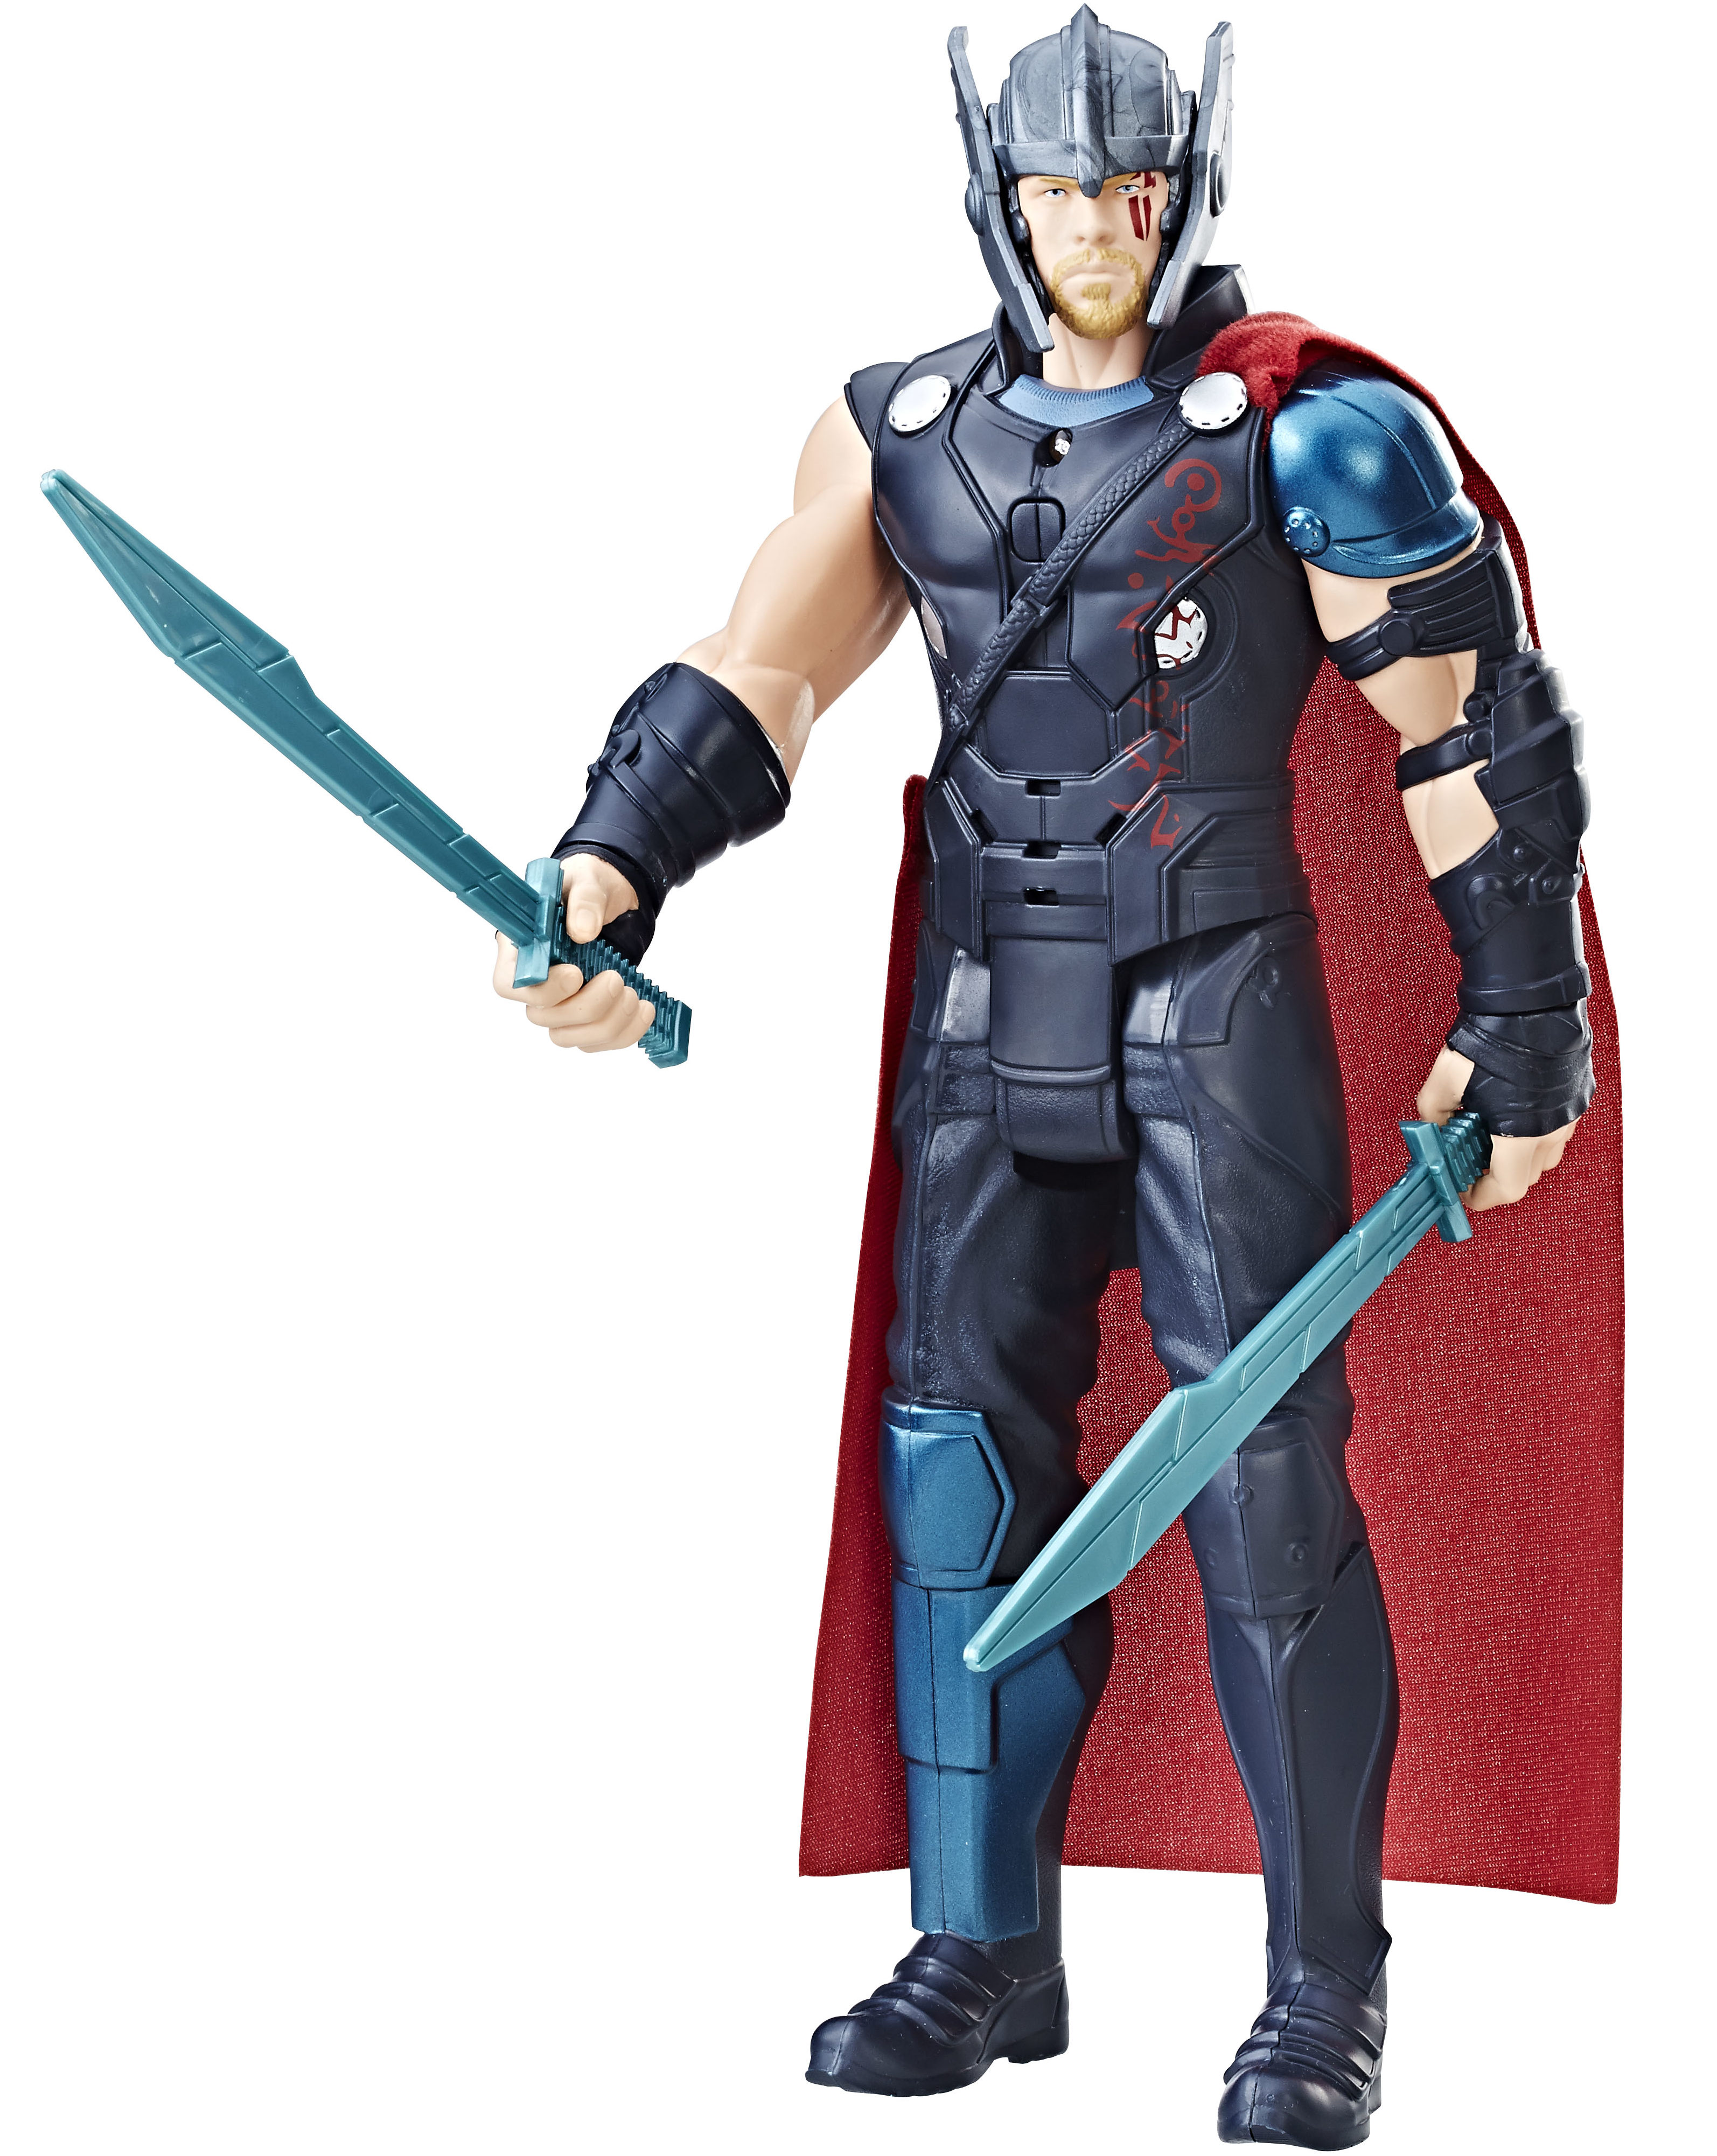 Hasbro Thor Ragnarok Movie Figures & Toys Revealed! - Marvel Toy News